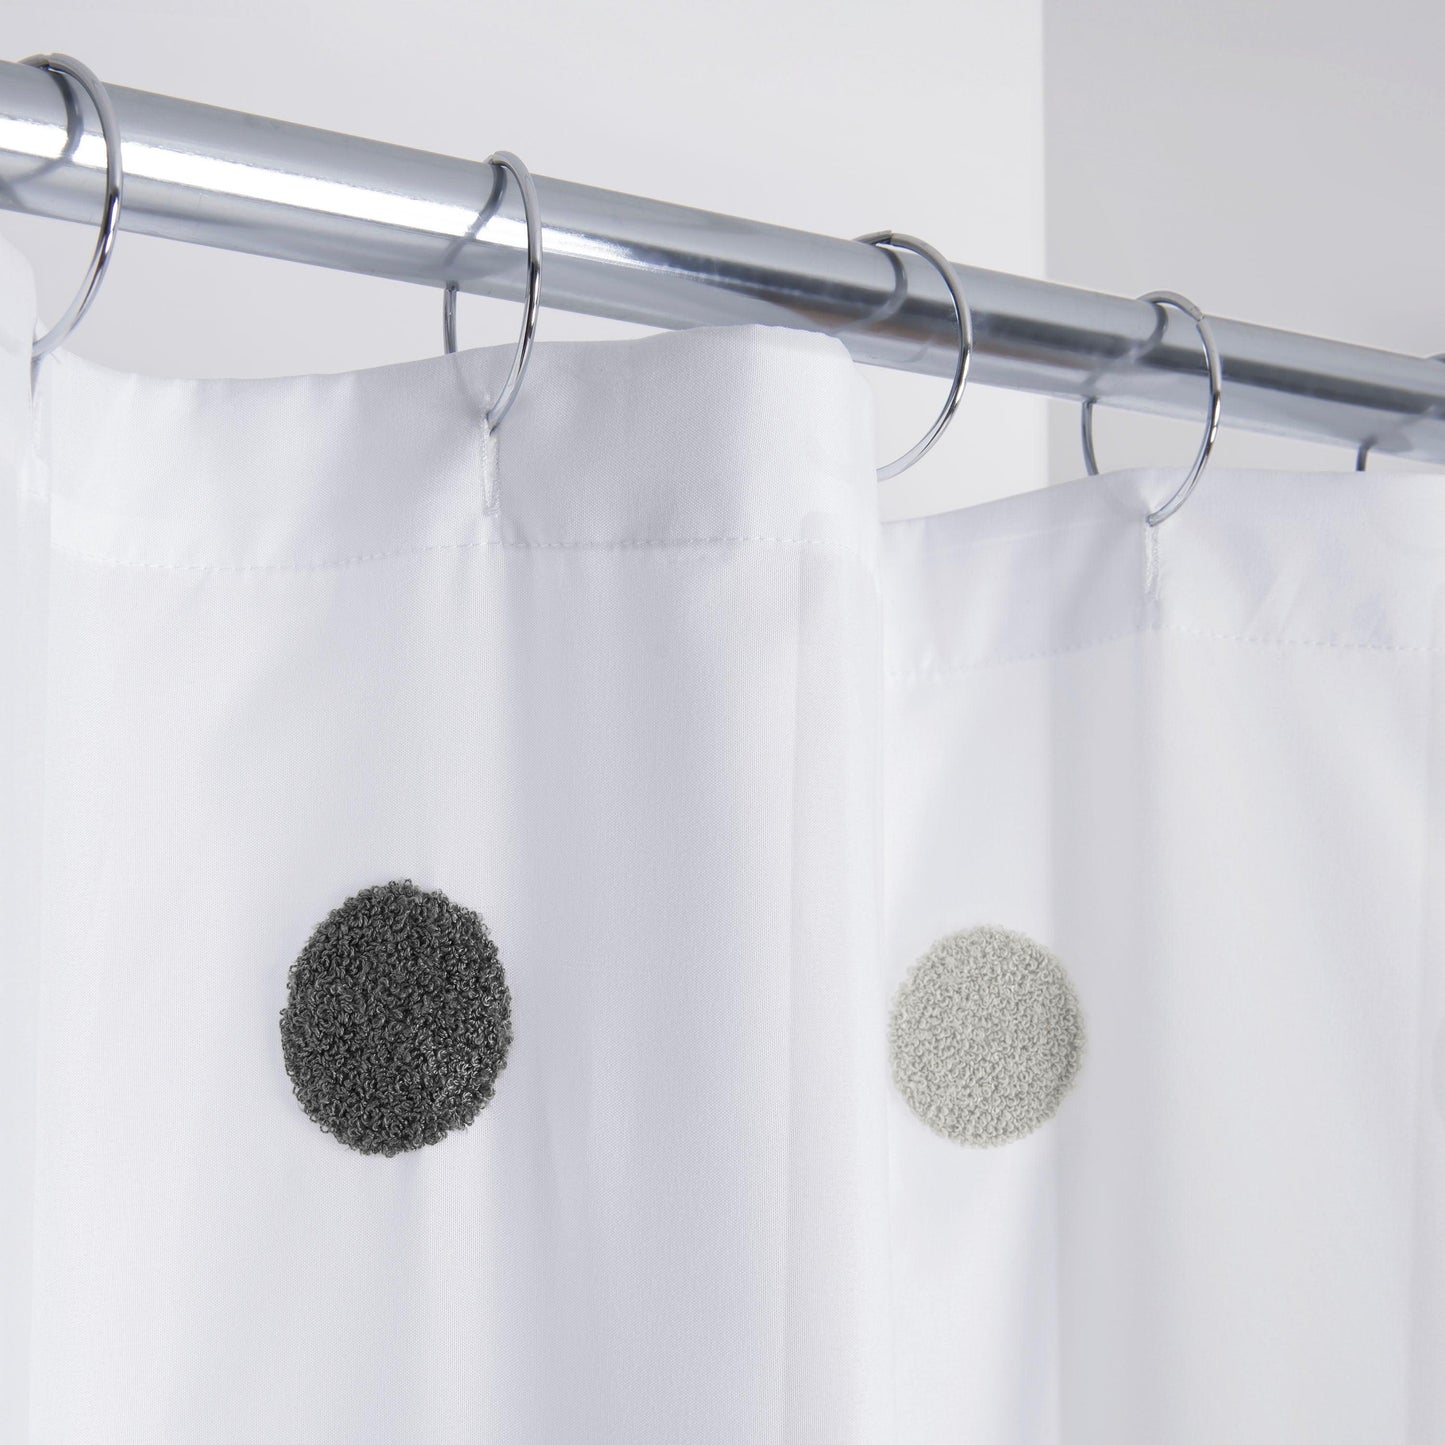 Dots Embellished Pom-Poms Shower Curtain - Allure Home Creation